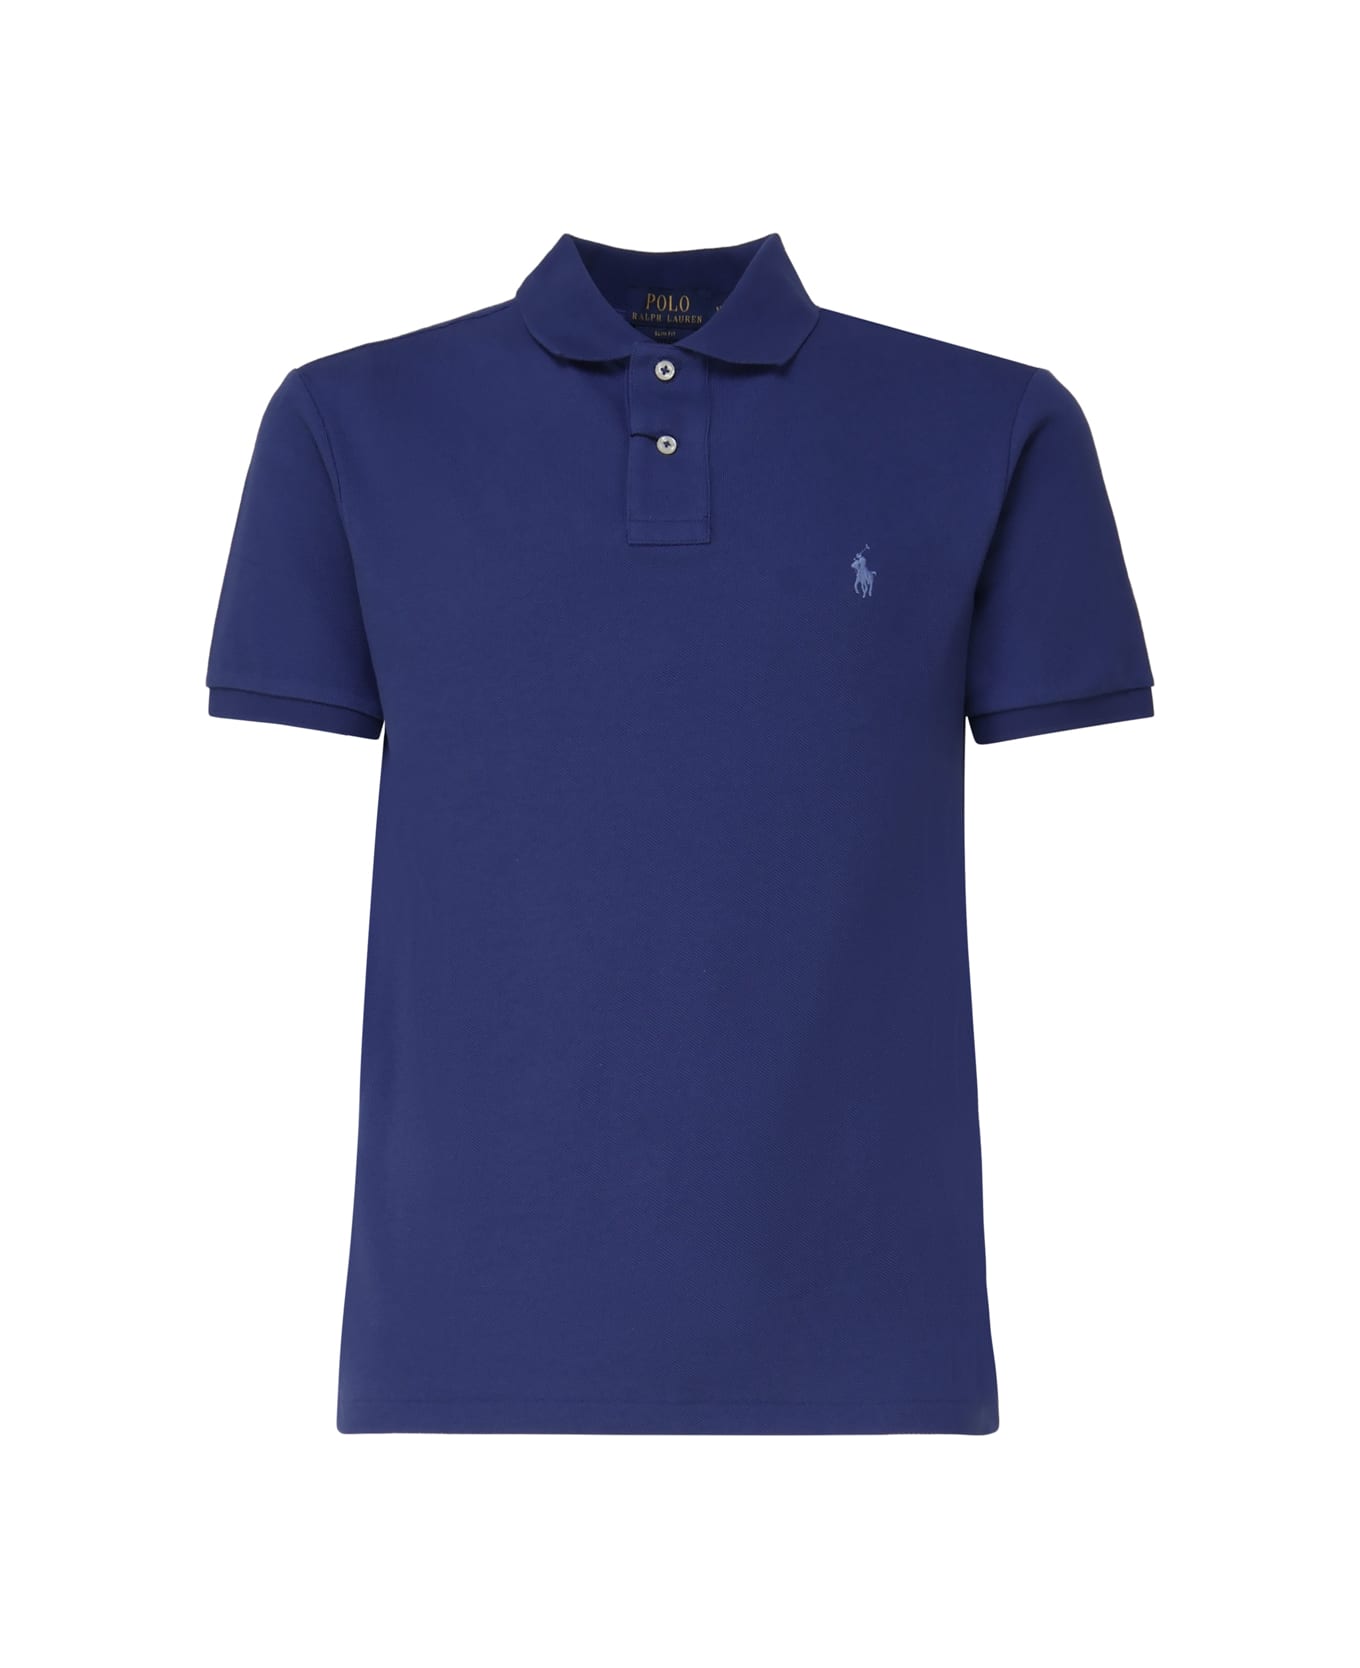 Polo Ralph Lauren Polo Shirt With Embroidery Polo Shirt - BLUE